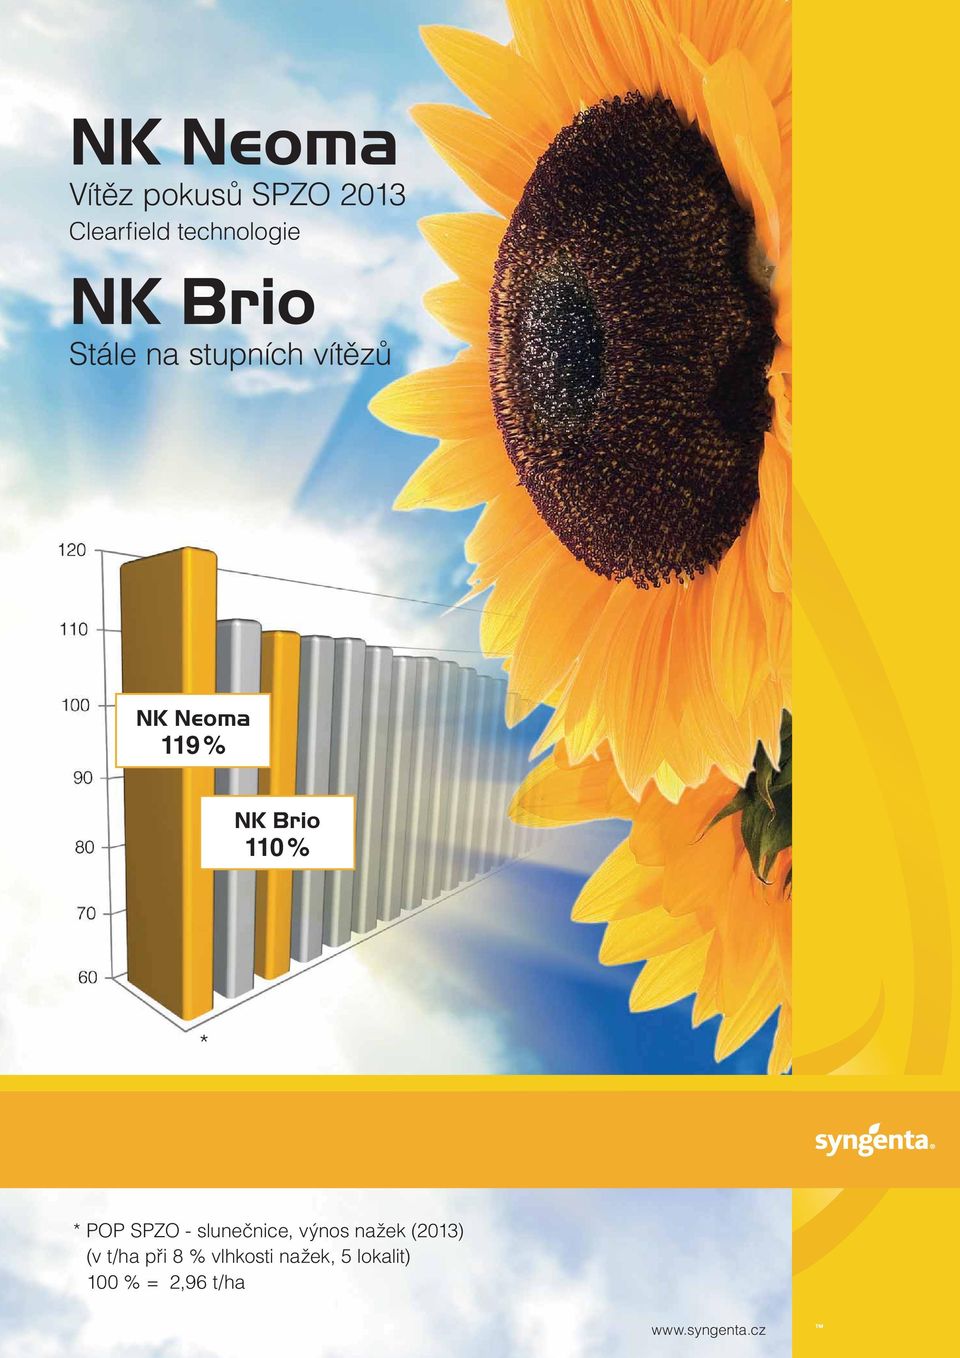 SPZO - slunečnice, výnos nažek (2013) (v t/ha při 8 % vlhkosti